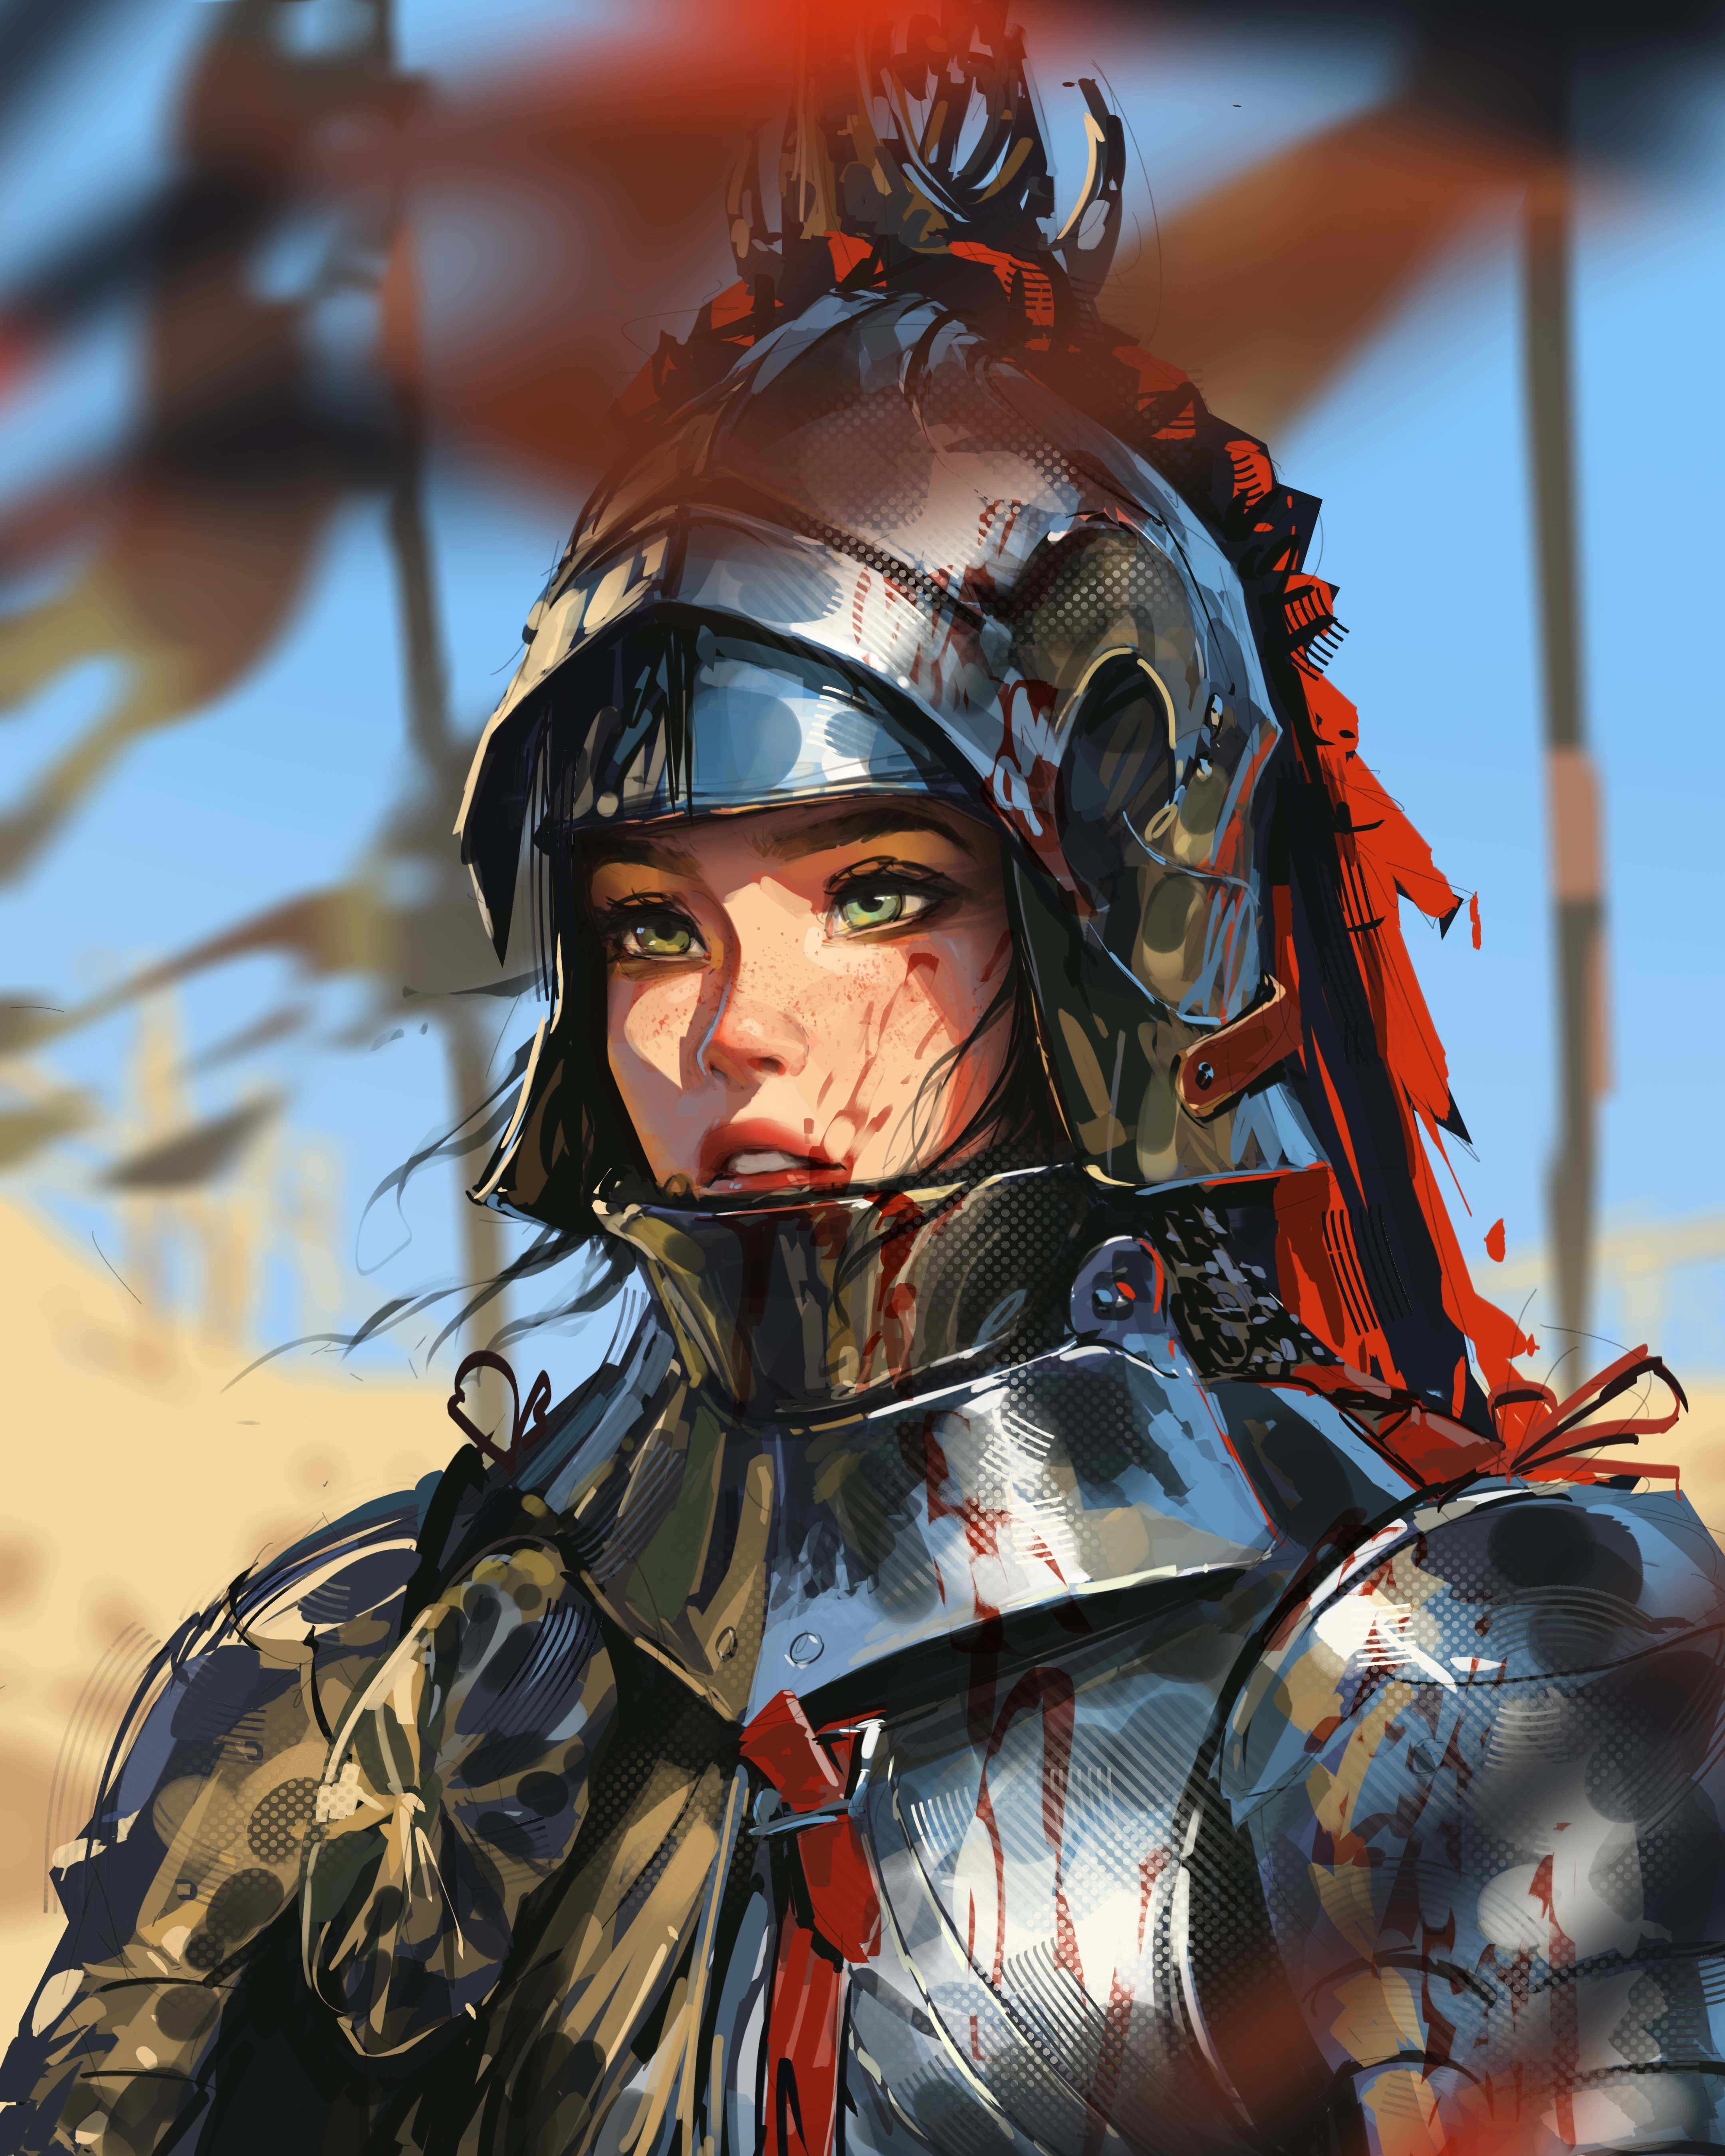 General 4320x5400 Sam Yang digital art artwork illustration women knight armor portrait blood red lipstick freckles medieval portrait display flag female warrior